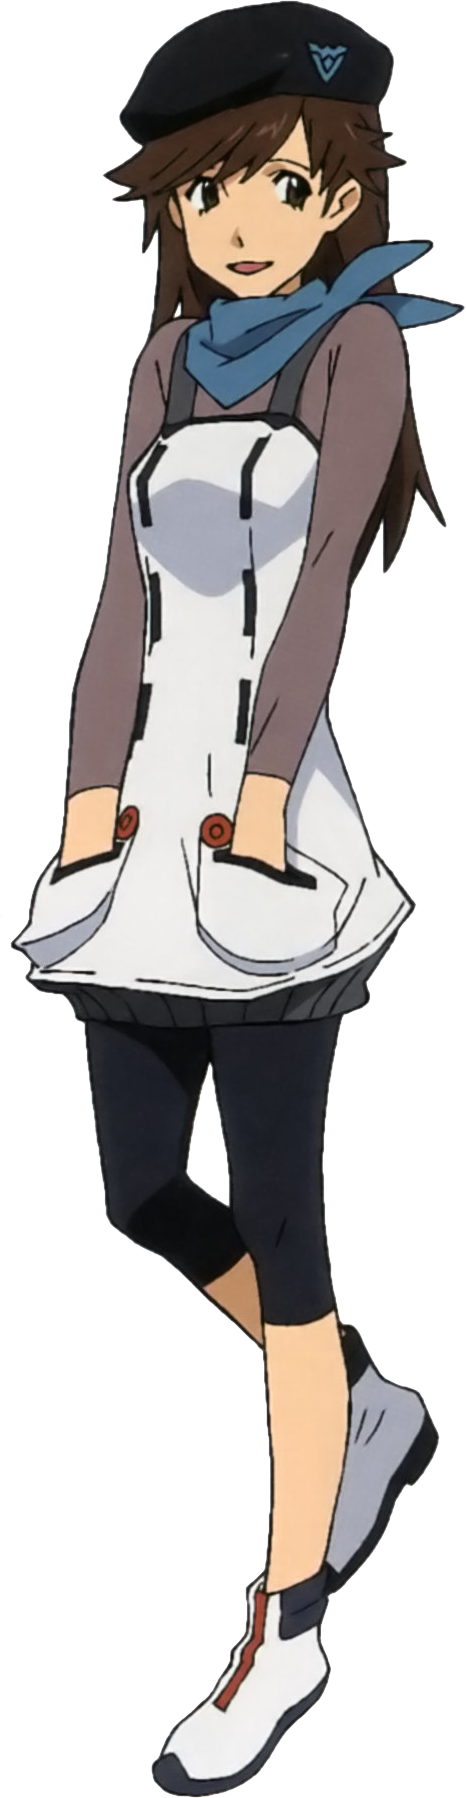 Evangelion Character Misato Katsuragi Standing Pose PNG